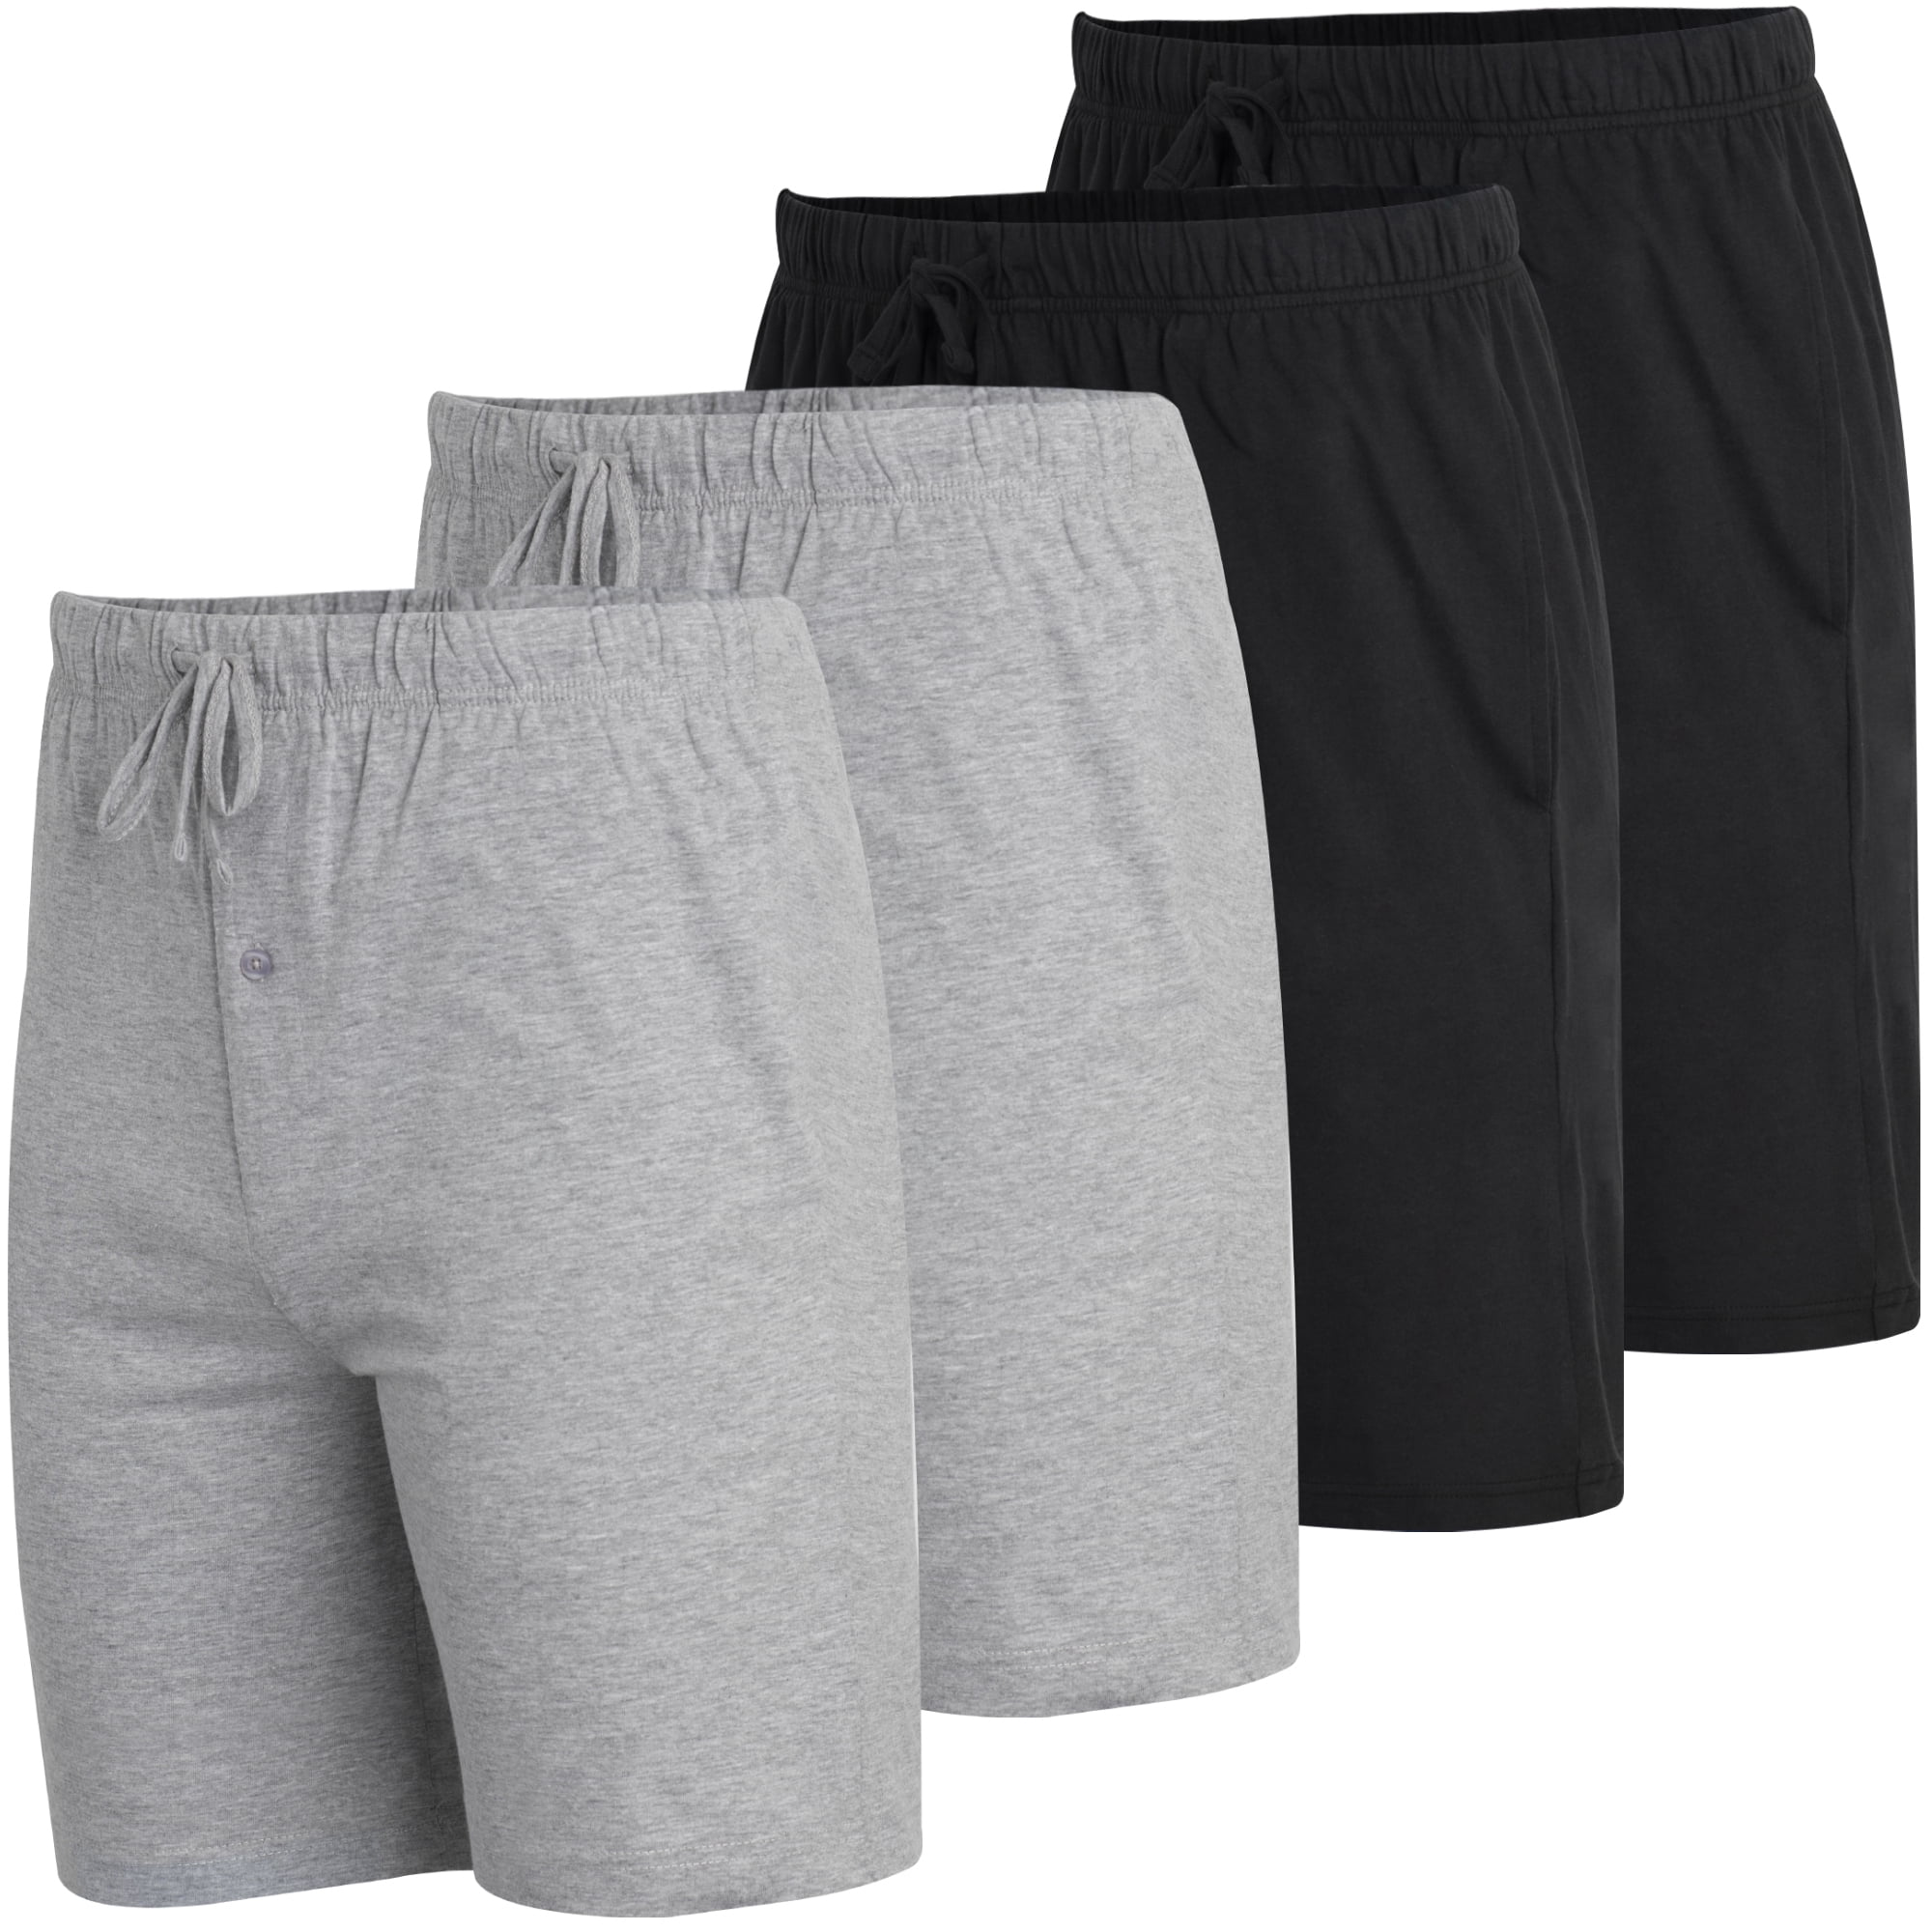 Real Essentials Men's 4-Pack Cotton Sleep Shorts, Sizes S-2XL, Mens Pajamas  - Walmart.com